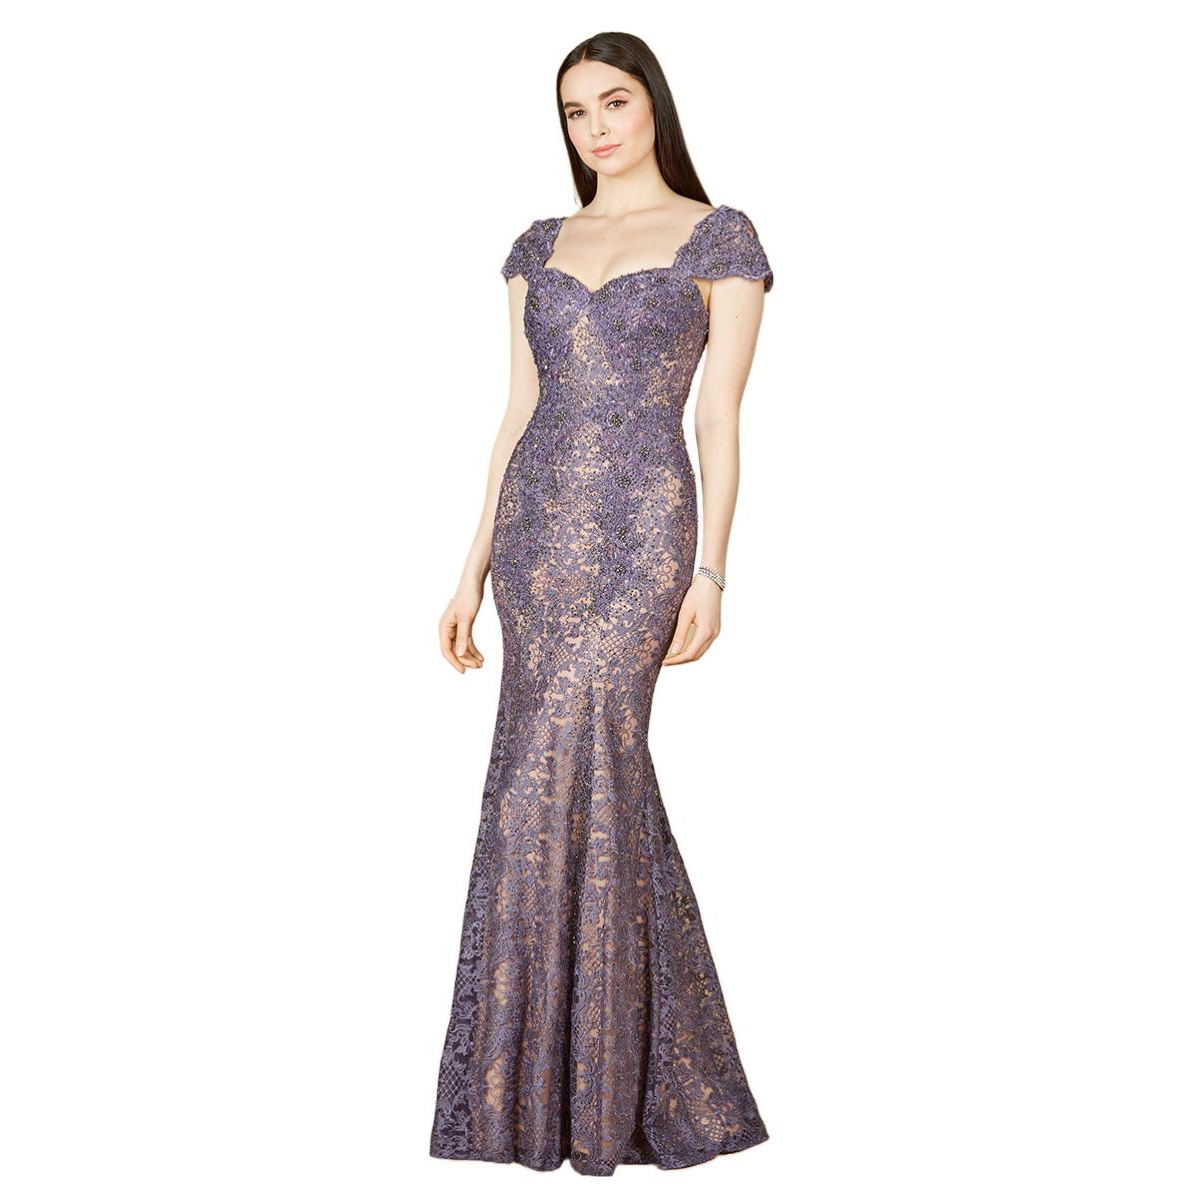 Women's Fitted Lace Mermaid Gown - Dusty purple